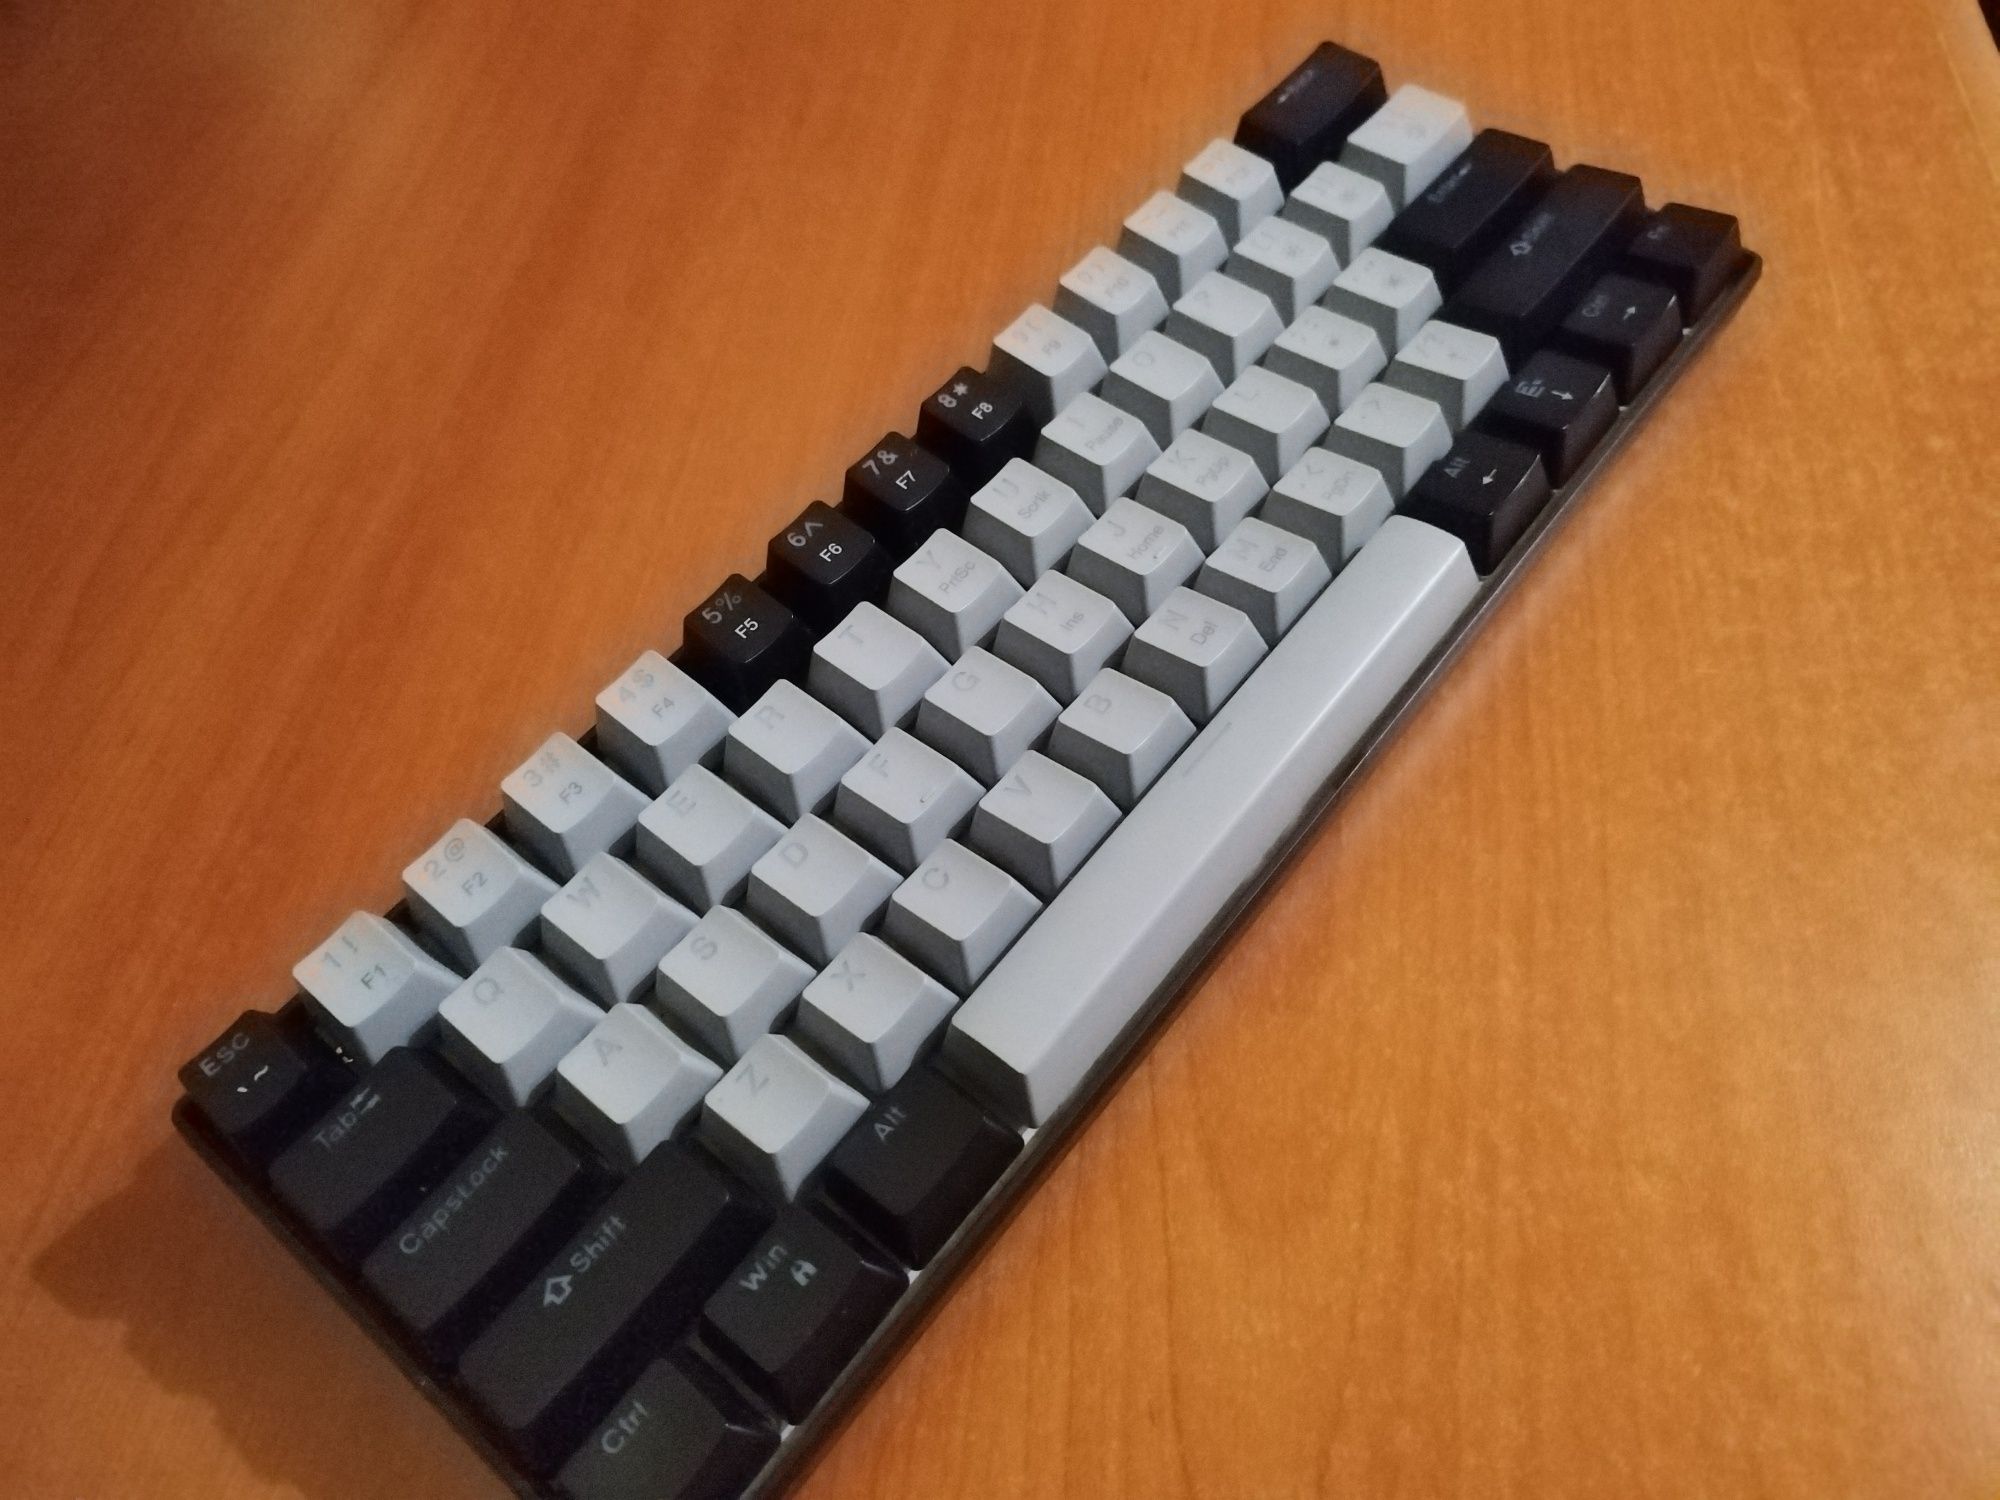 Tastatura mecanica + Mouse  aqirys wirless